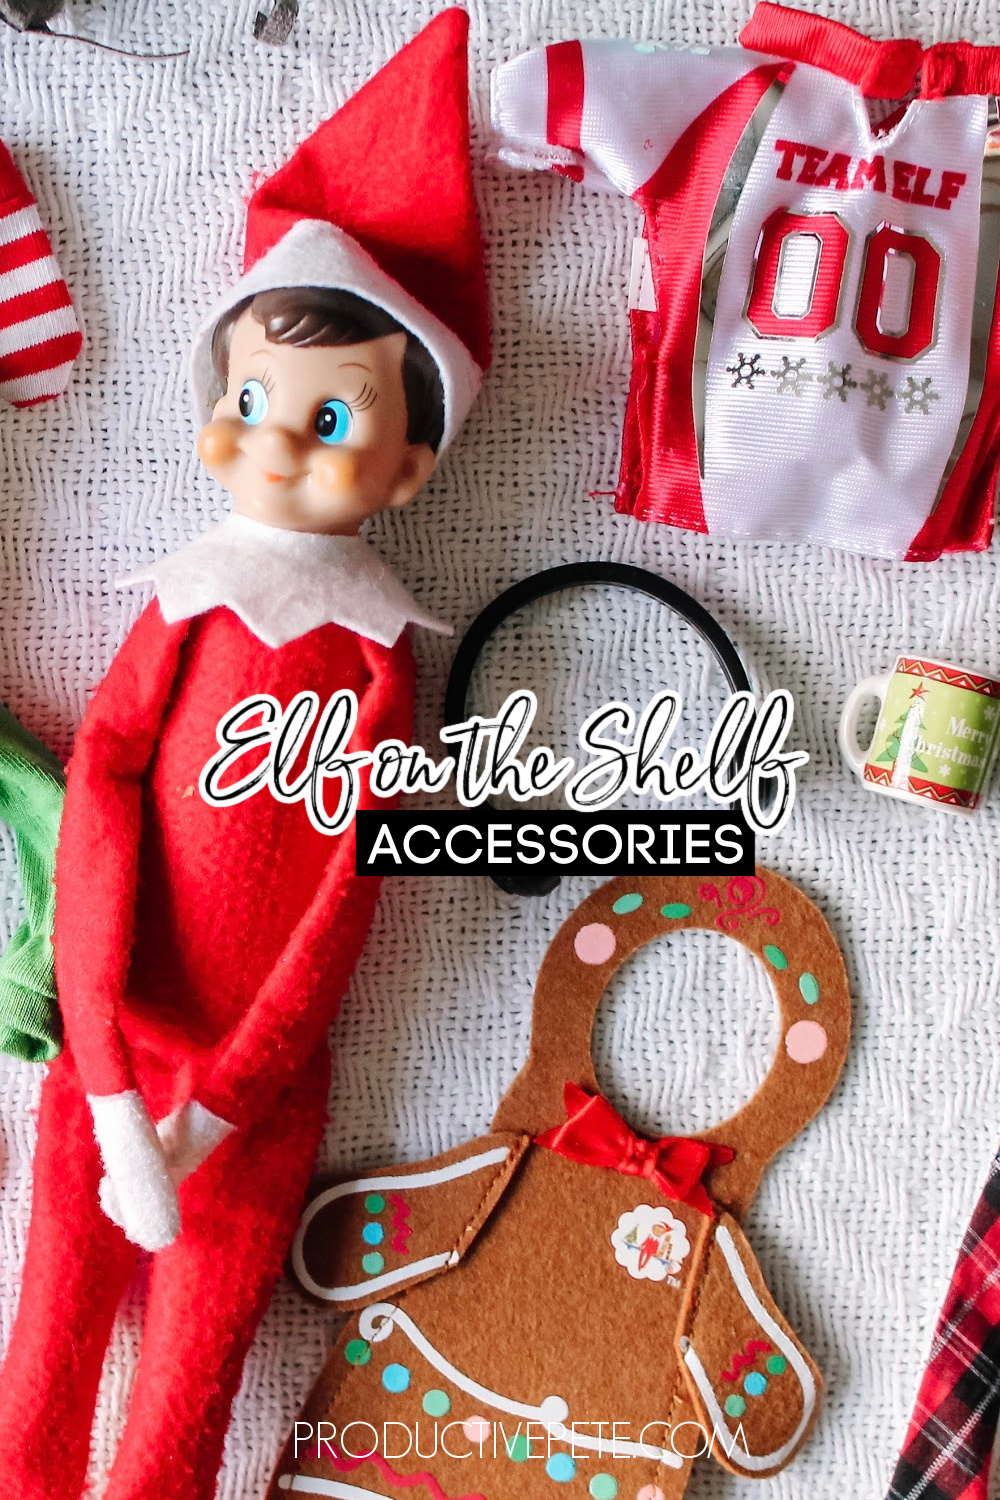 Fun Elf on the Shelf Accessories & Clothes Ideas - Productive Pete